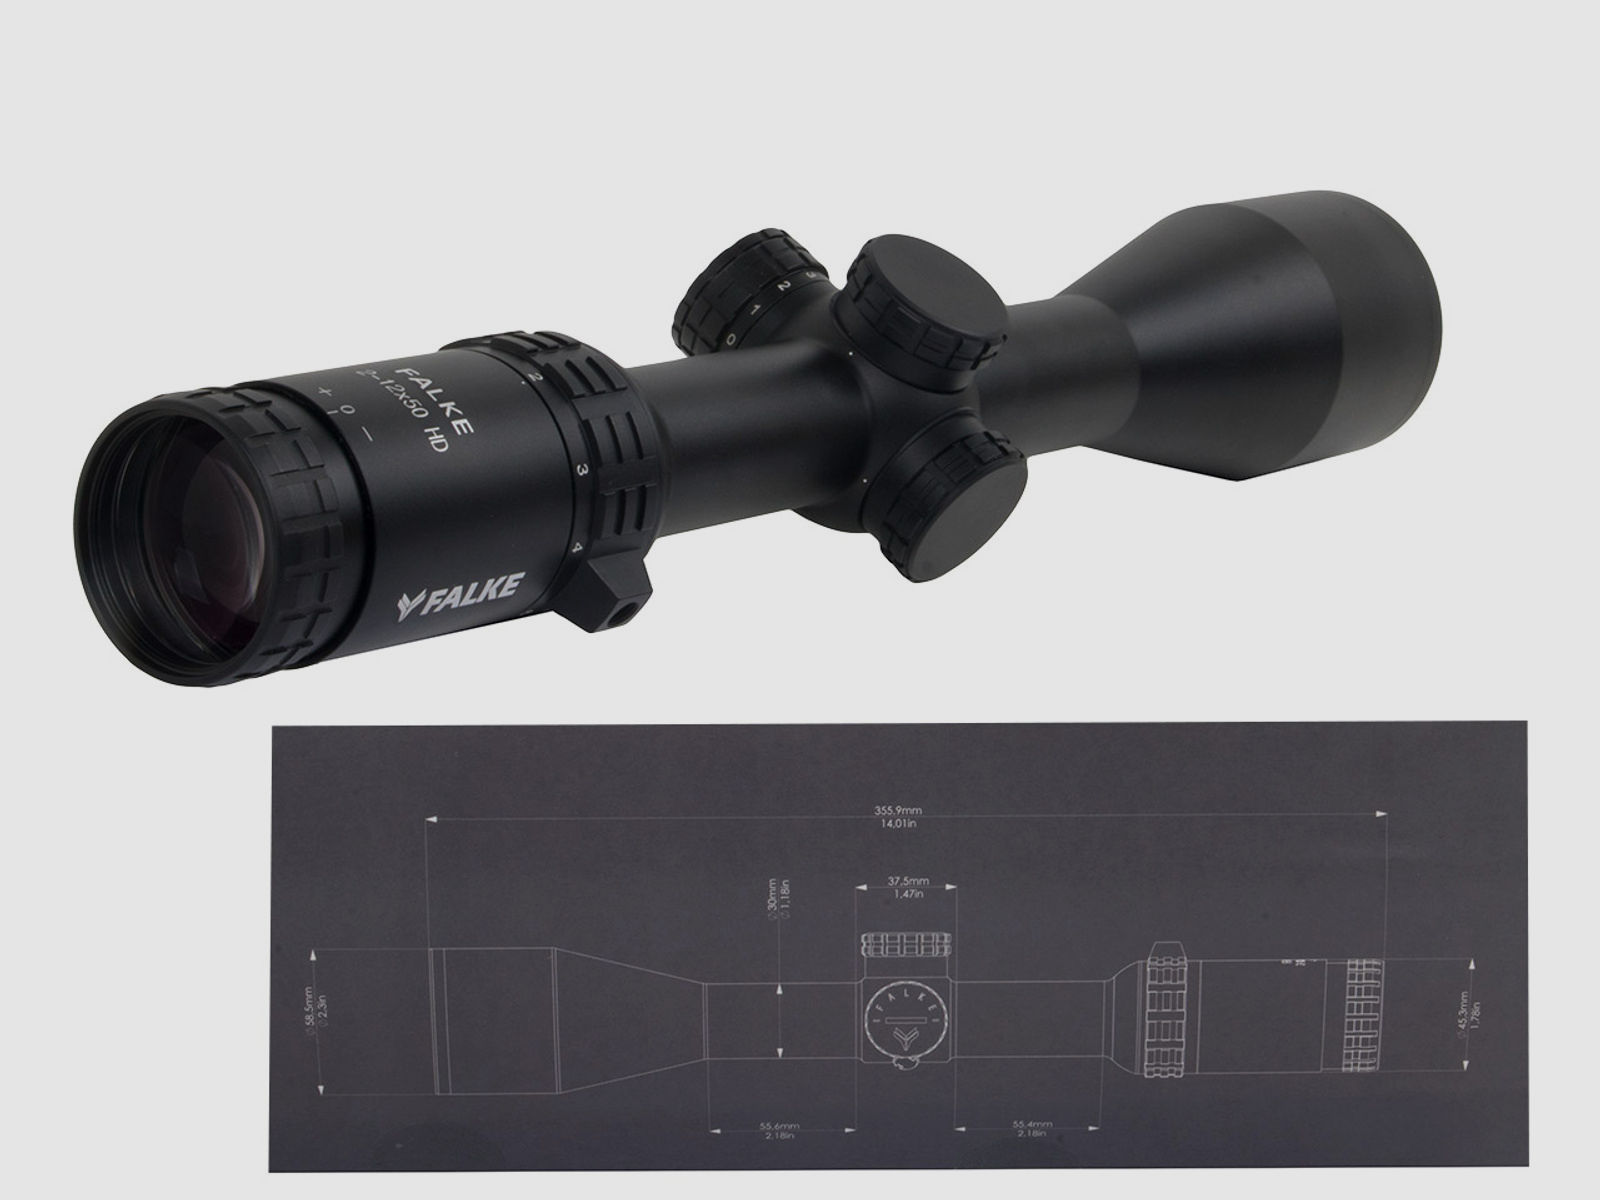 Zielfernrohr Falke 2-12x50 HD TAC Sport-Dot Absehen beleuchtet 30 mm Tubus